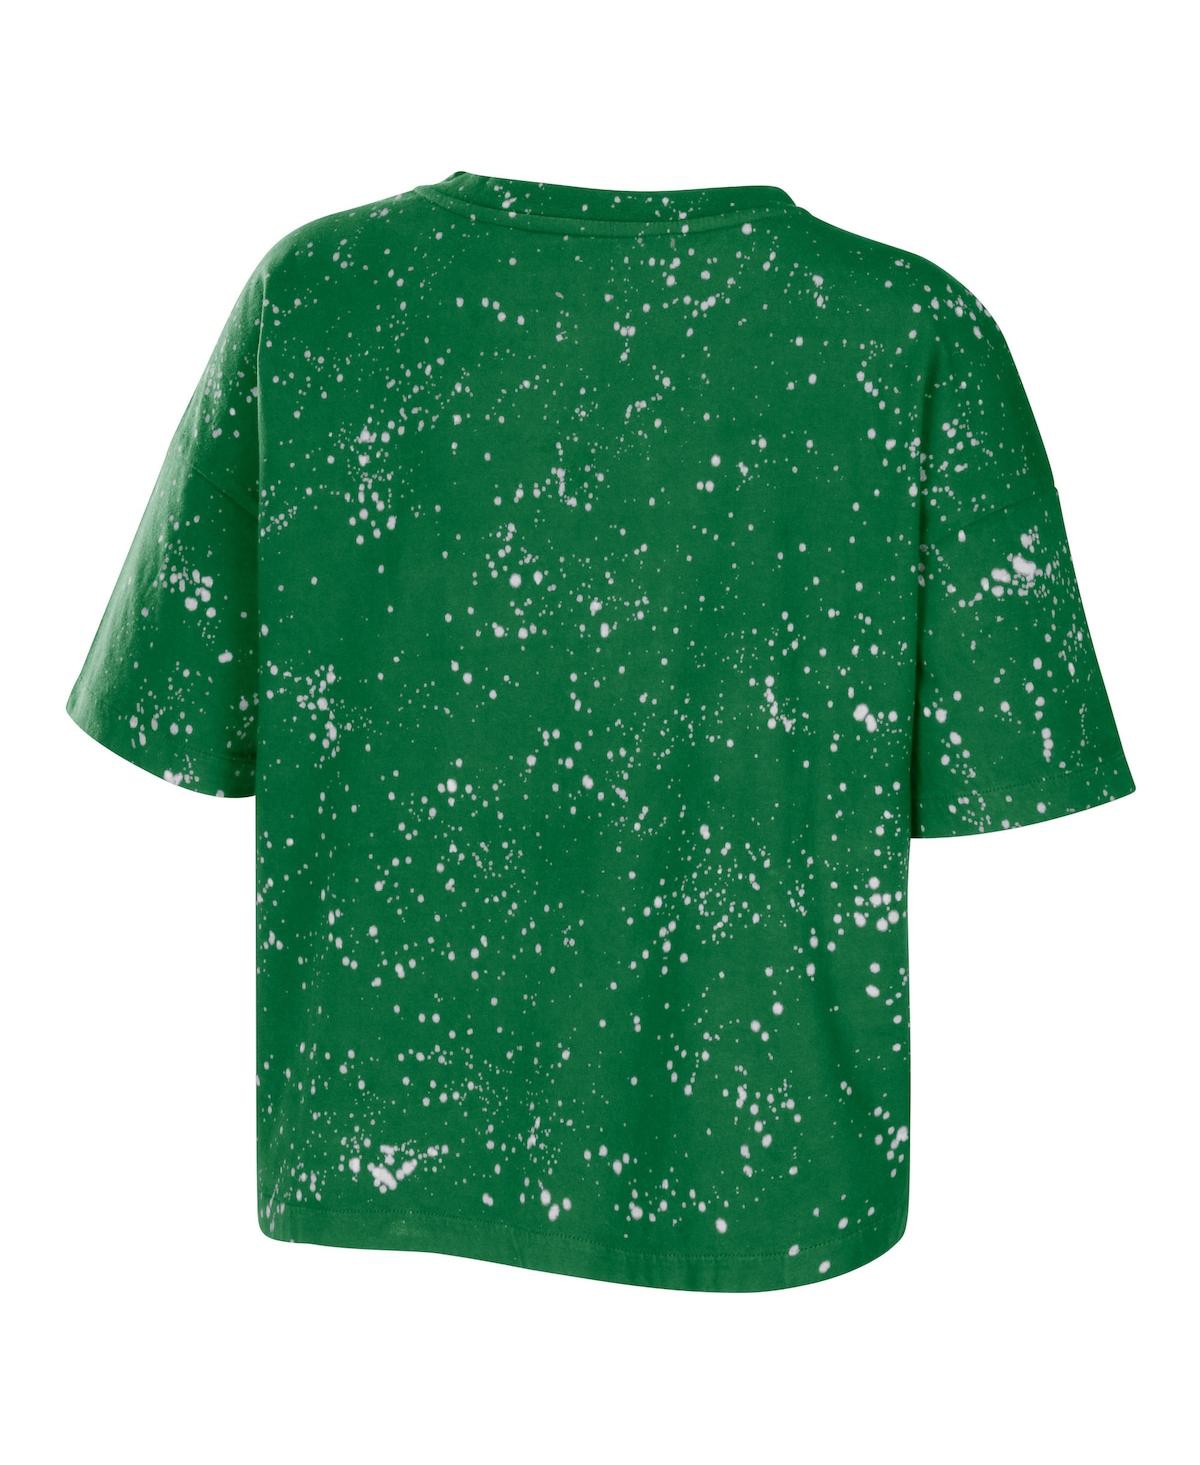 Shop Wear By Erin Andrews Women's  Green Oregon Ducks Bleach Wash Splatter Cropped Notch Neck T-shirt